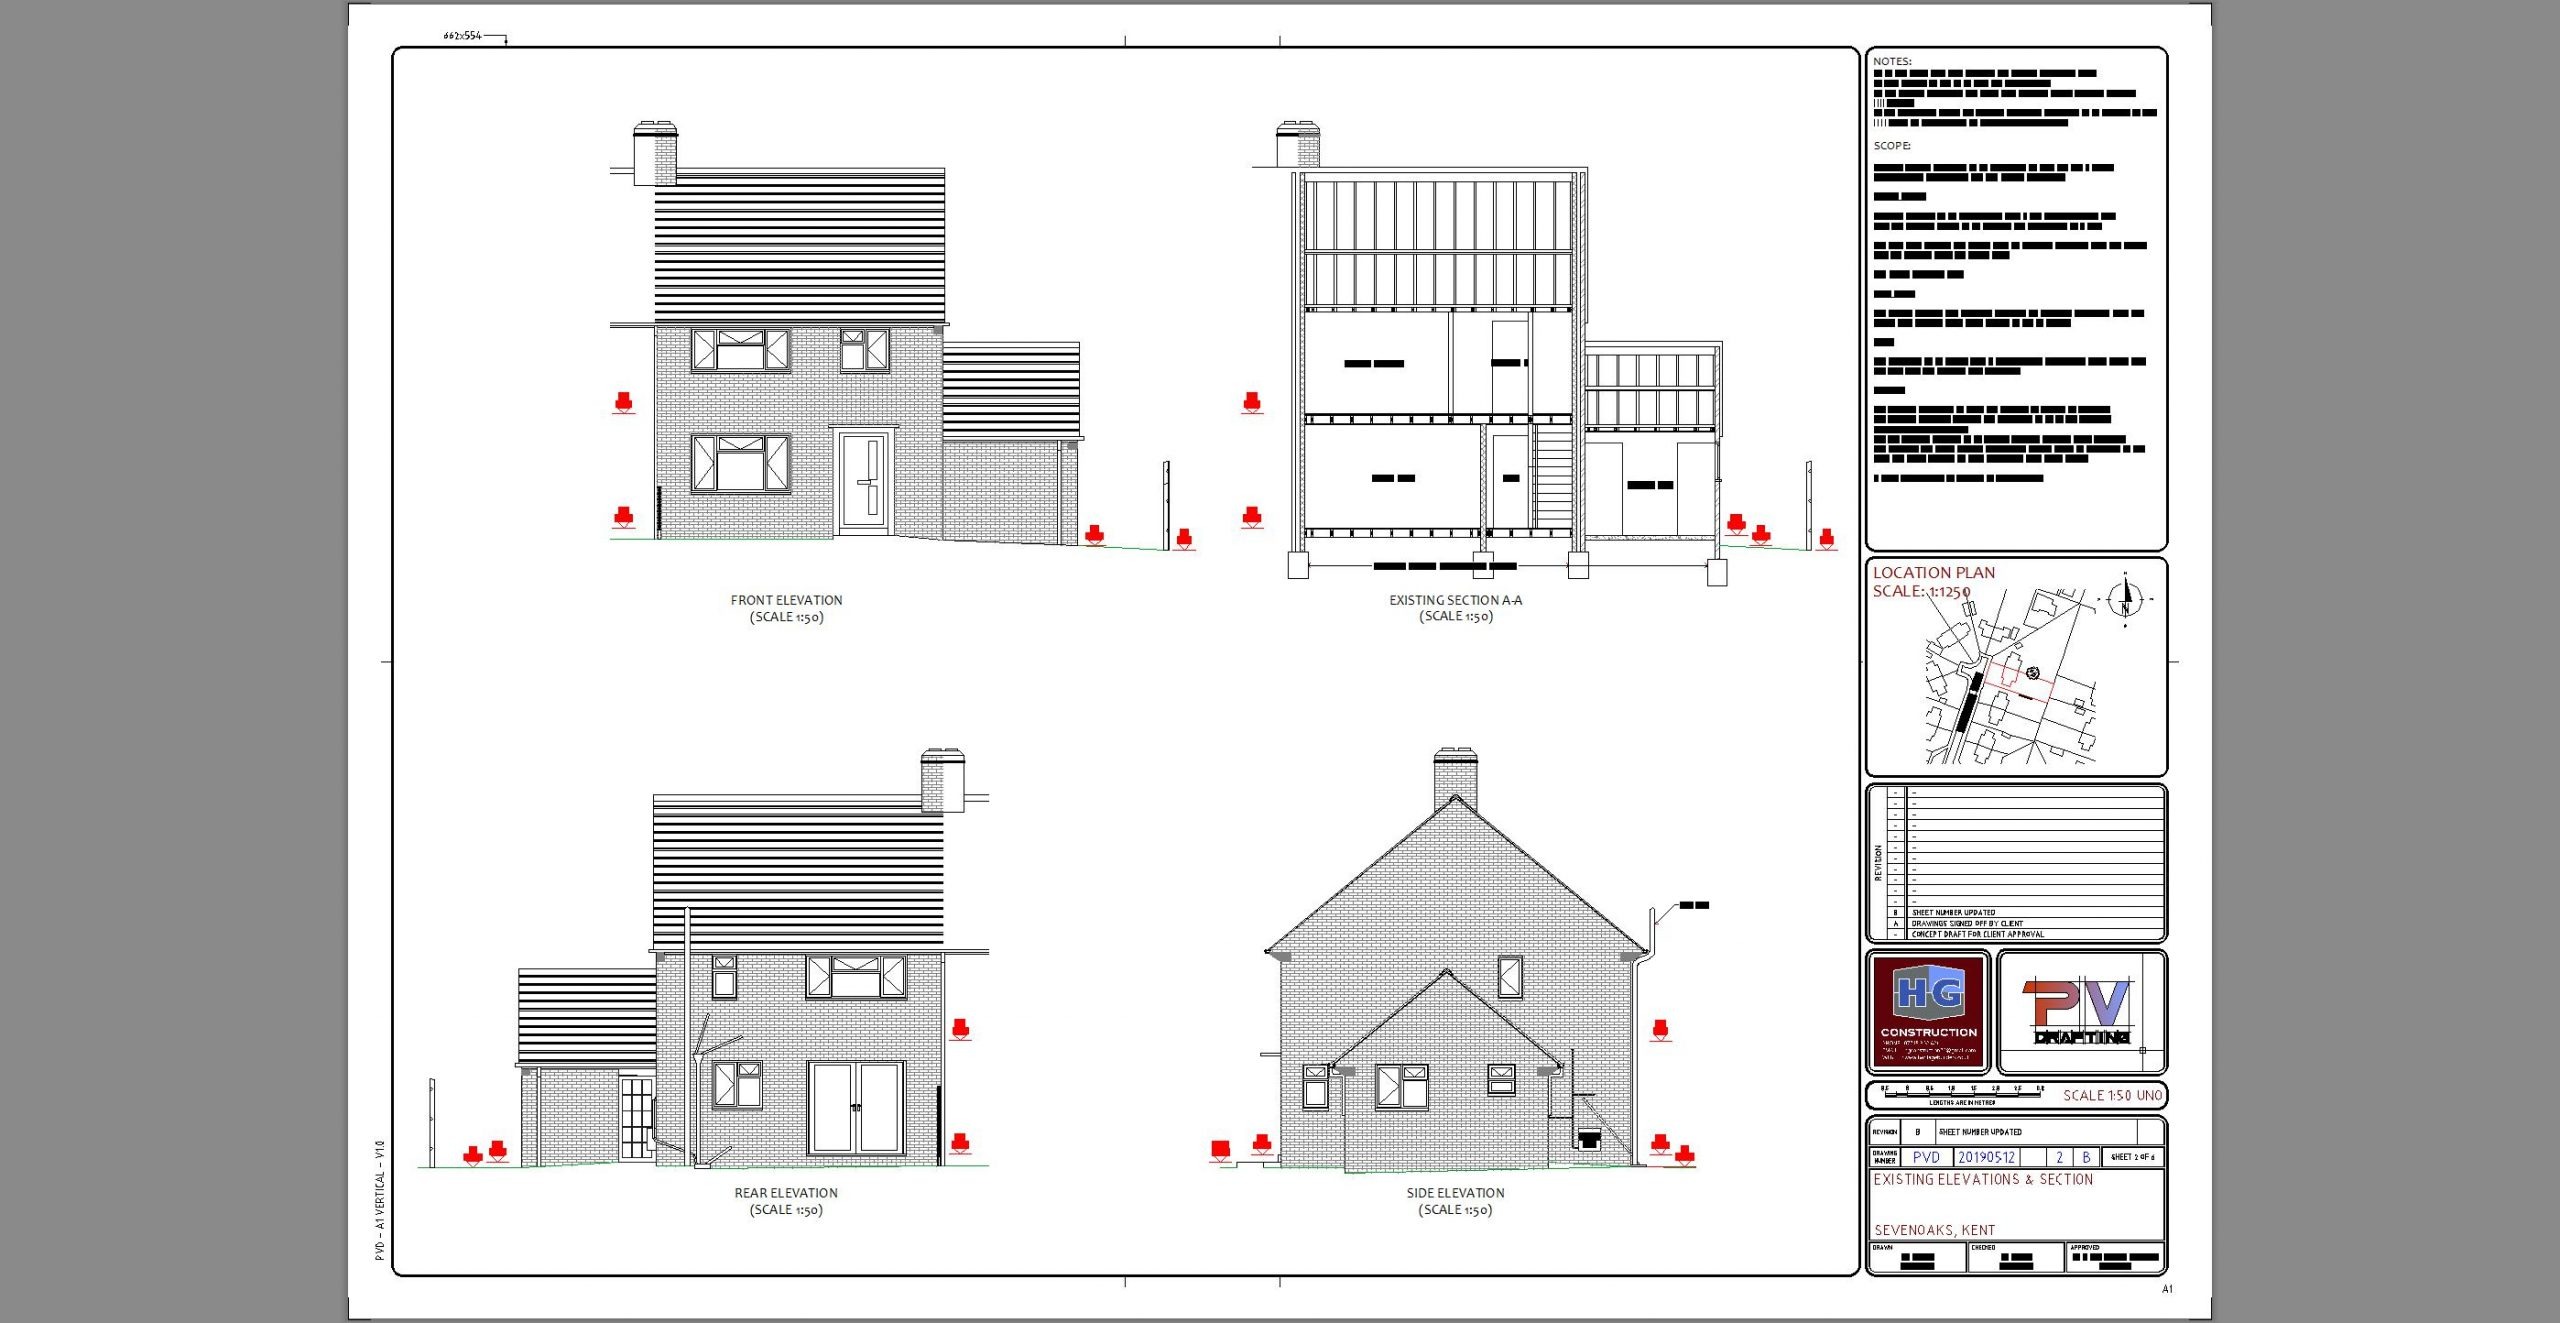 Building Regulations Drawing - Sevenoaks Kent - Existing Elevations & Section